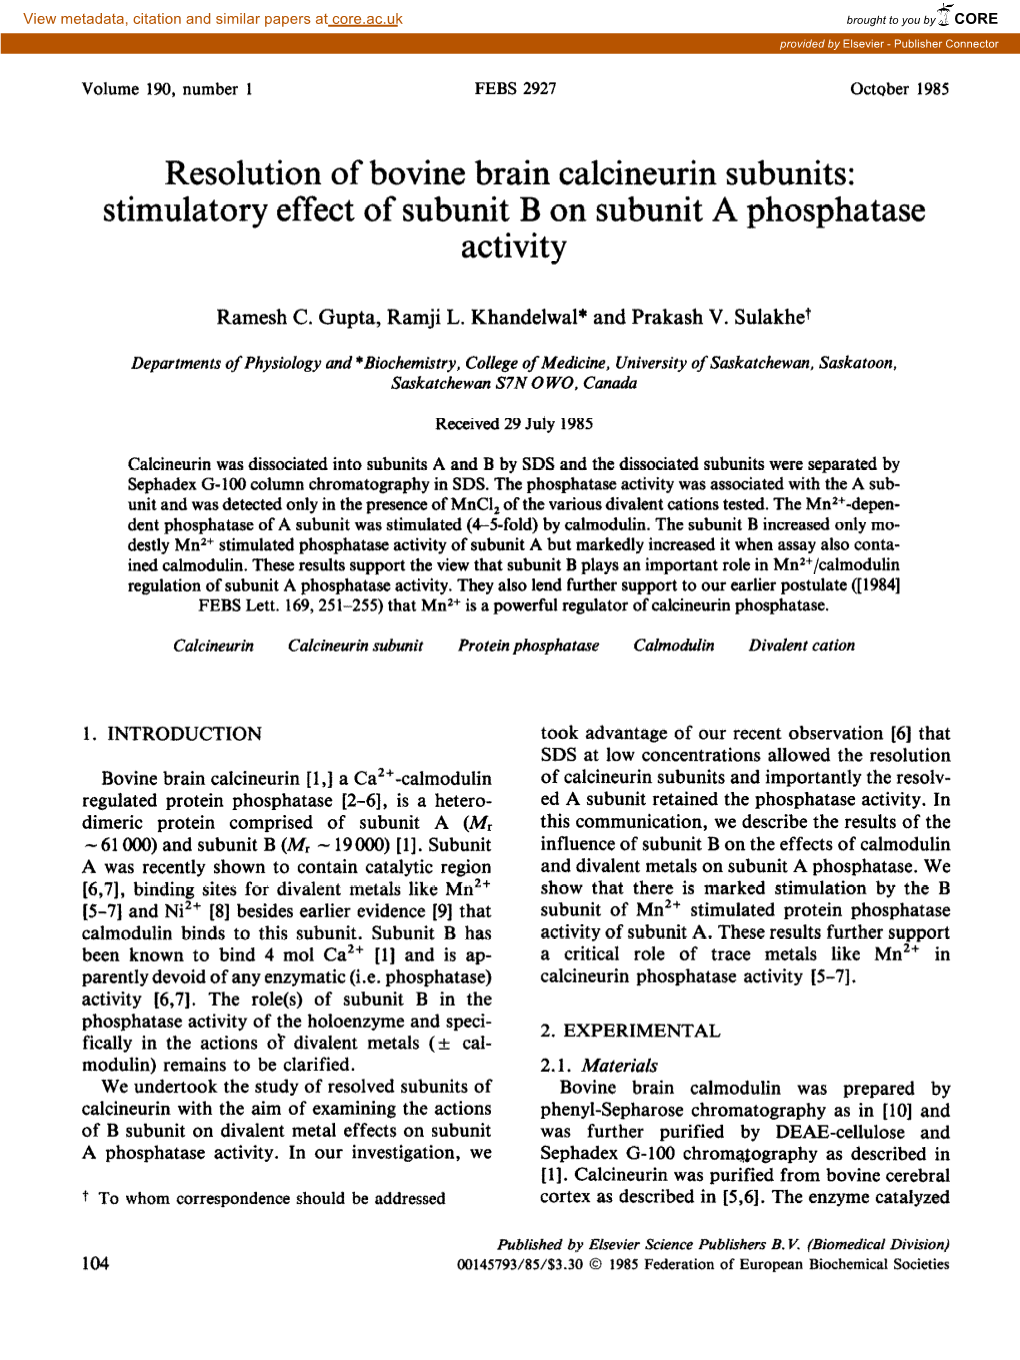 Resolution of Bovine Brain Calcineurin Subunits: Stimu~Atory Effect of Subunit I3 on Subunit a P~Osp~Atase Activity